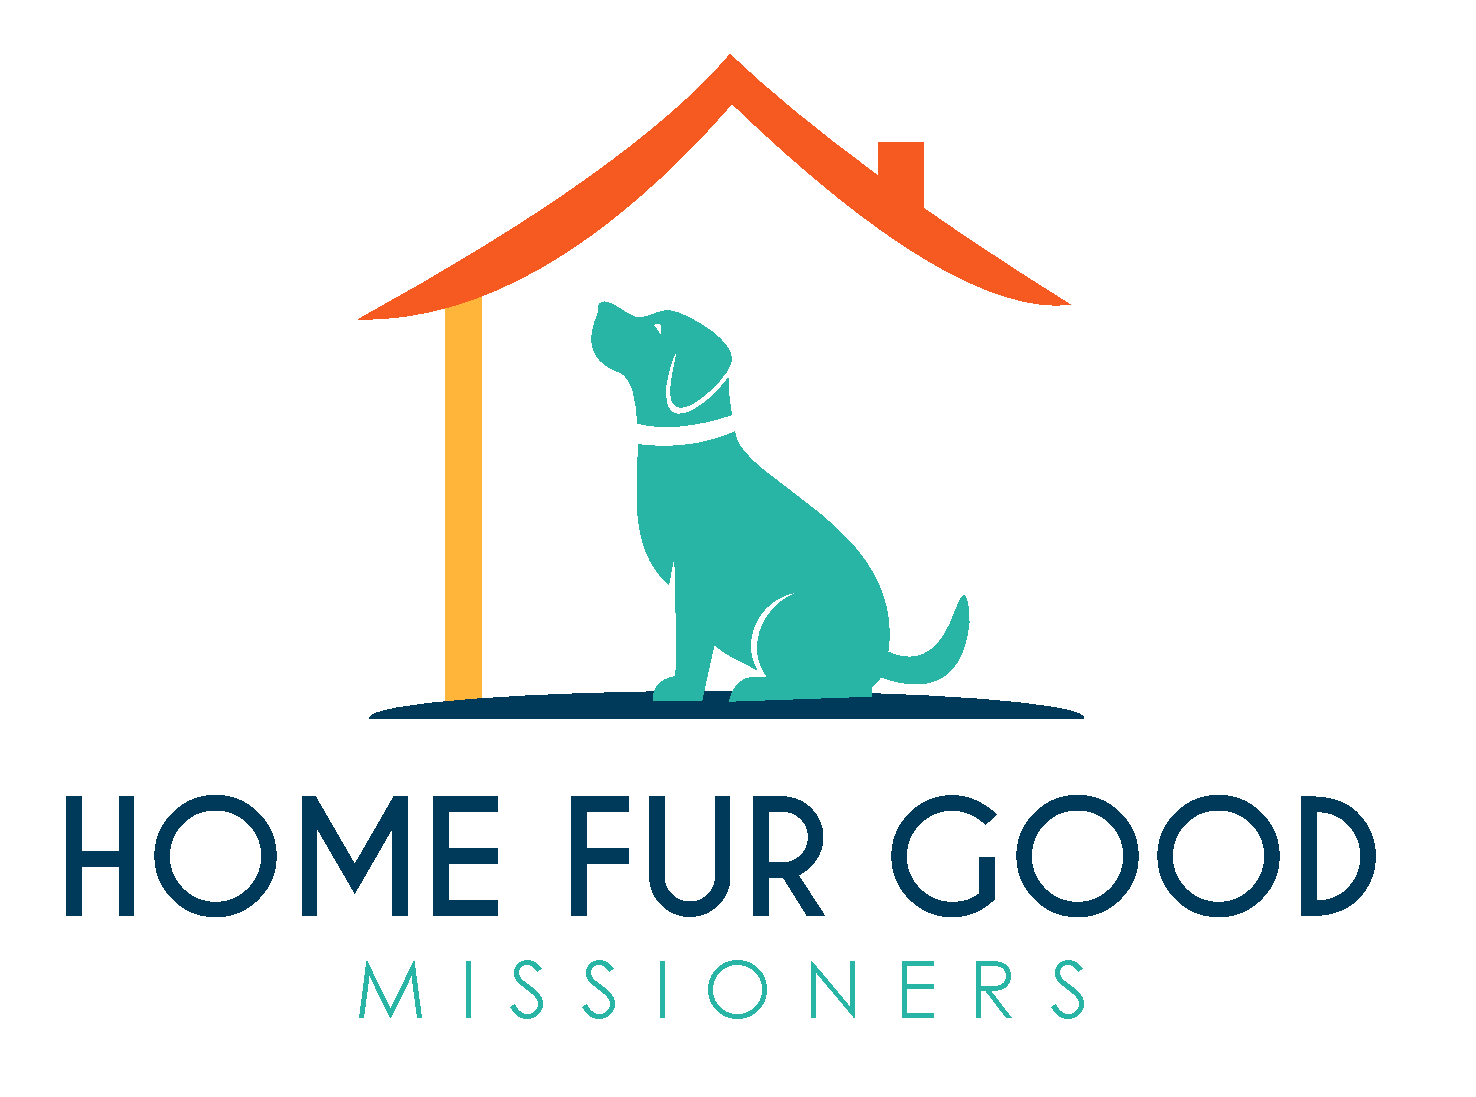 Home Fur Good Missioners